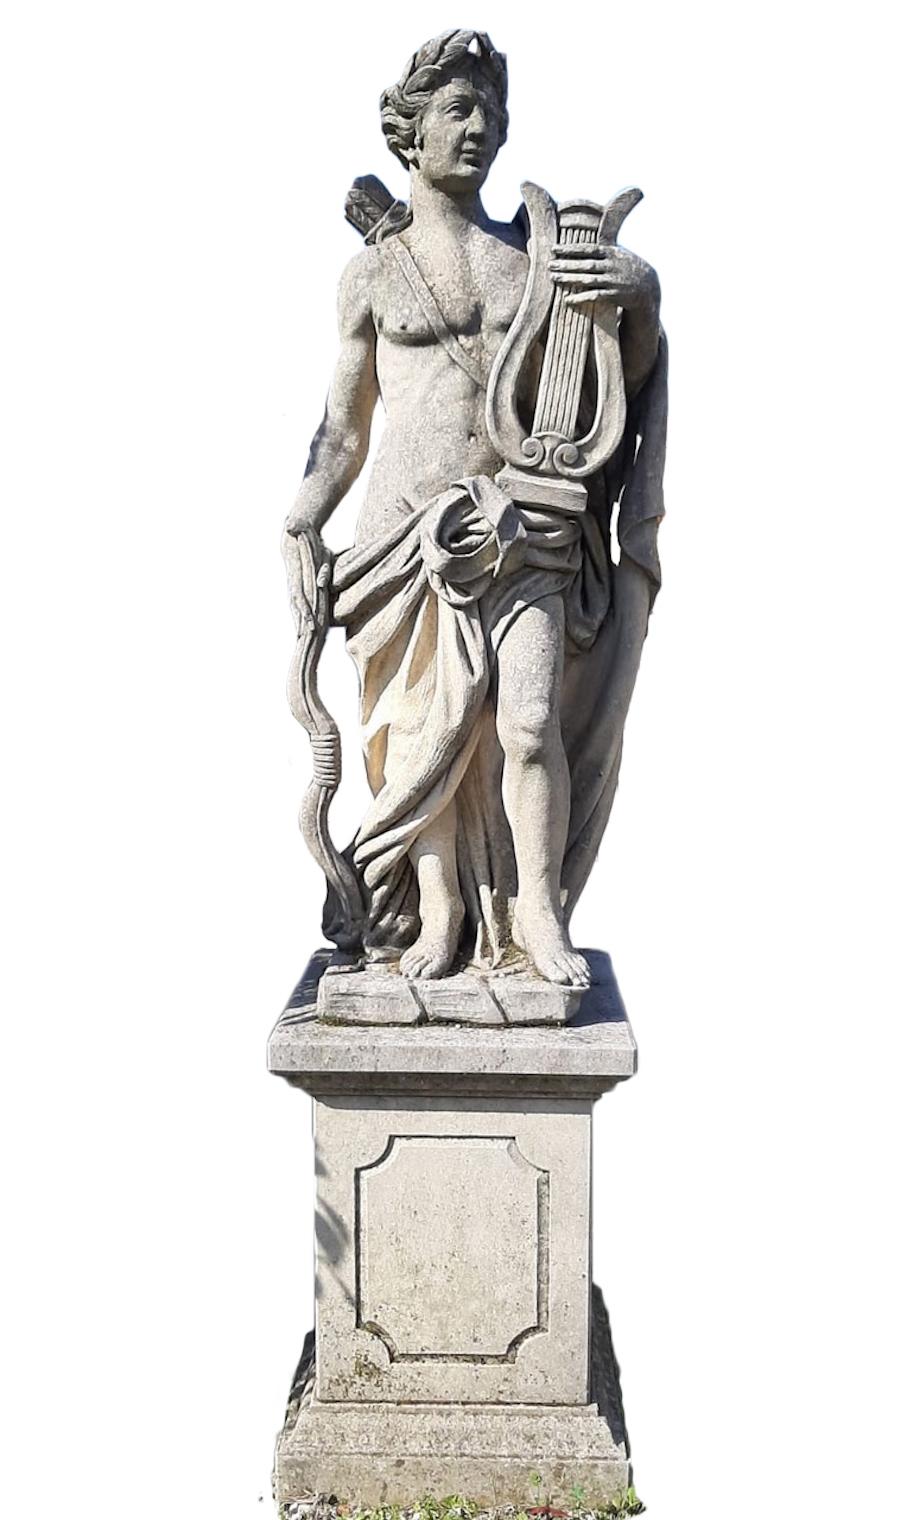  Italian Stone Garden Sculpture of Roman Mythological subject Apollo